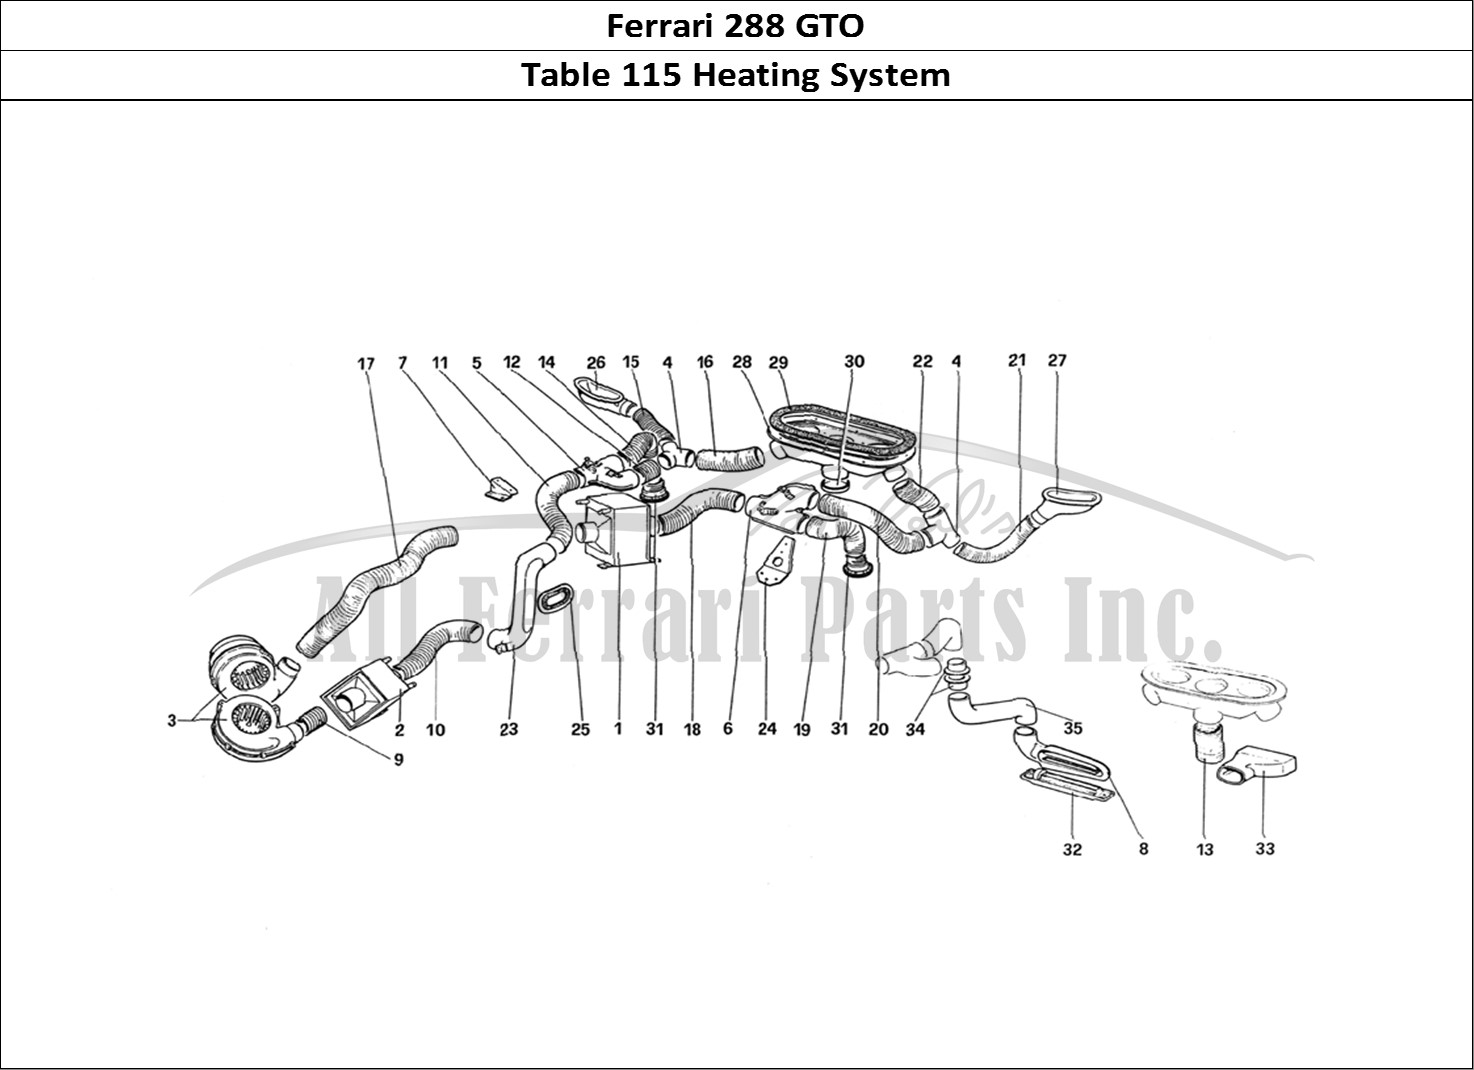 Ferrari Parts Ferrari 288 GTO Page 115 Heating System